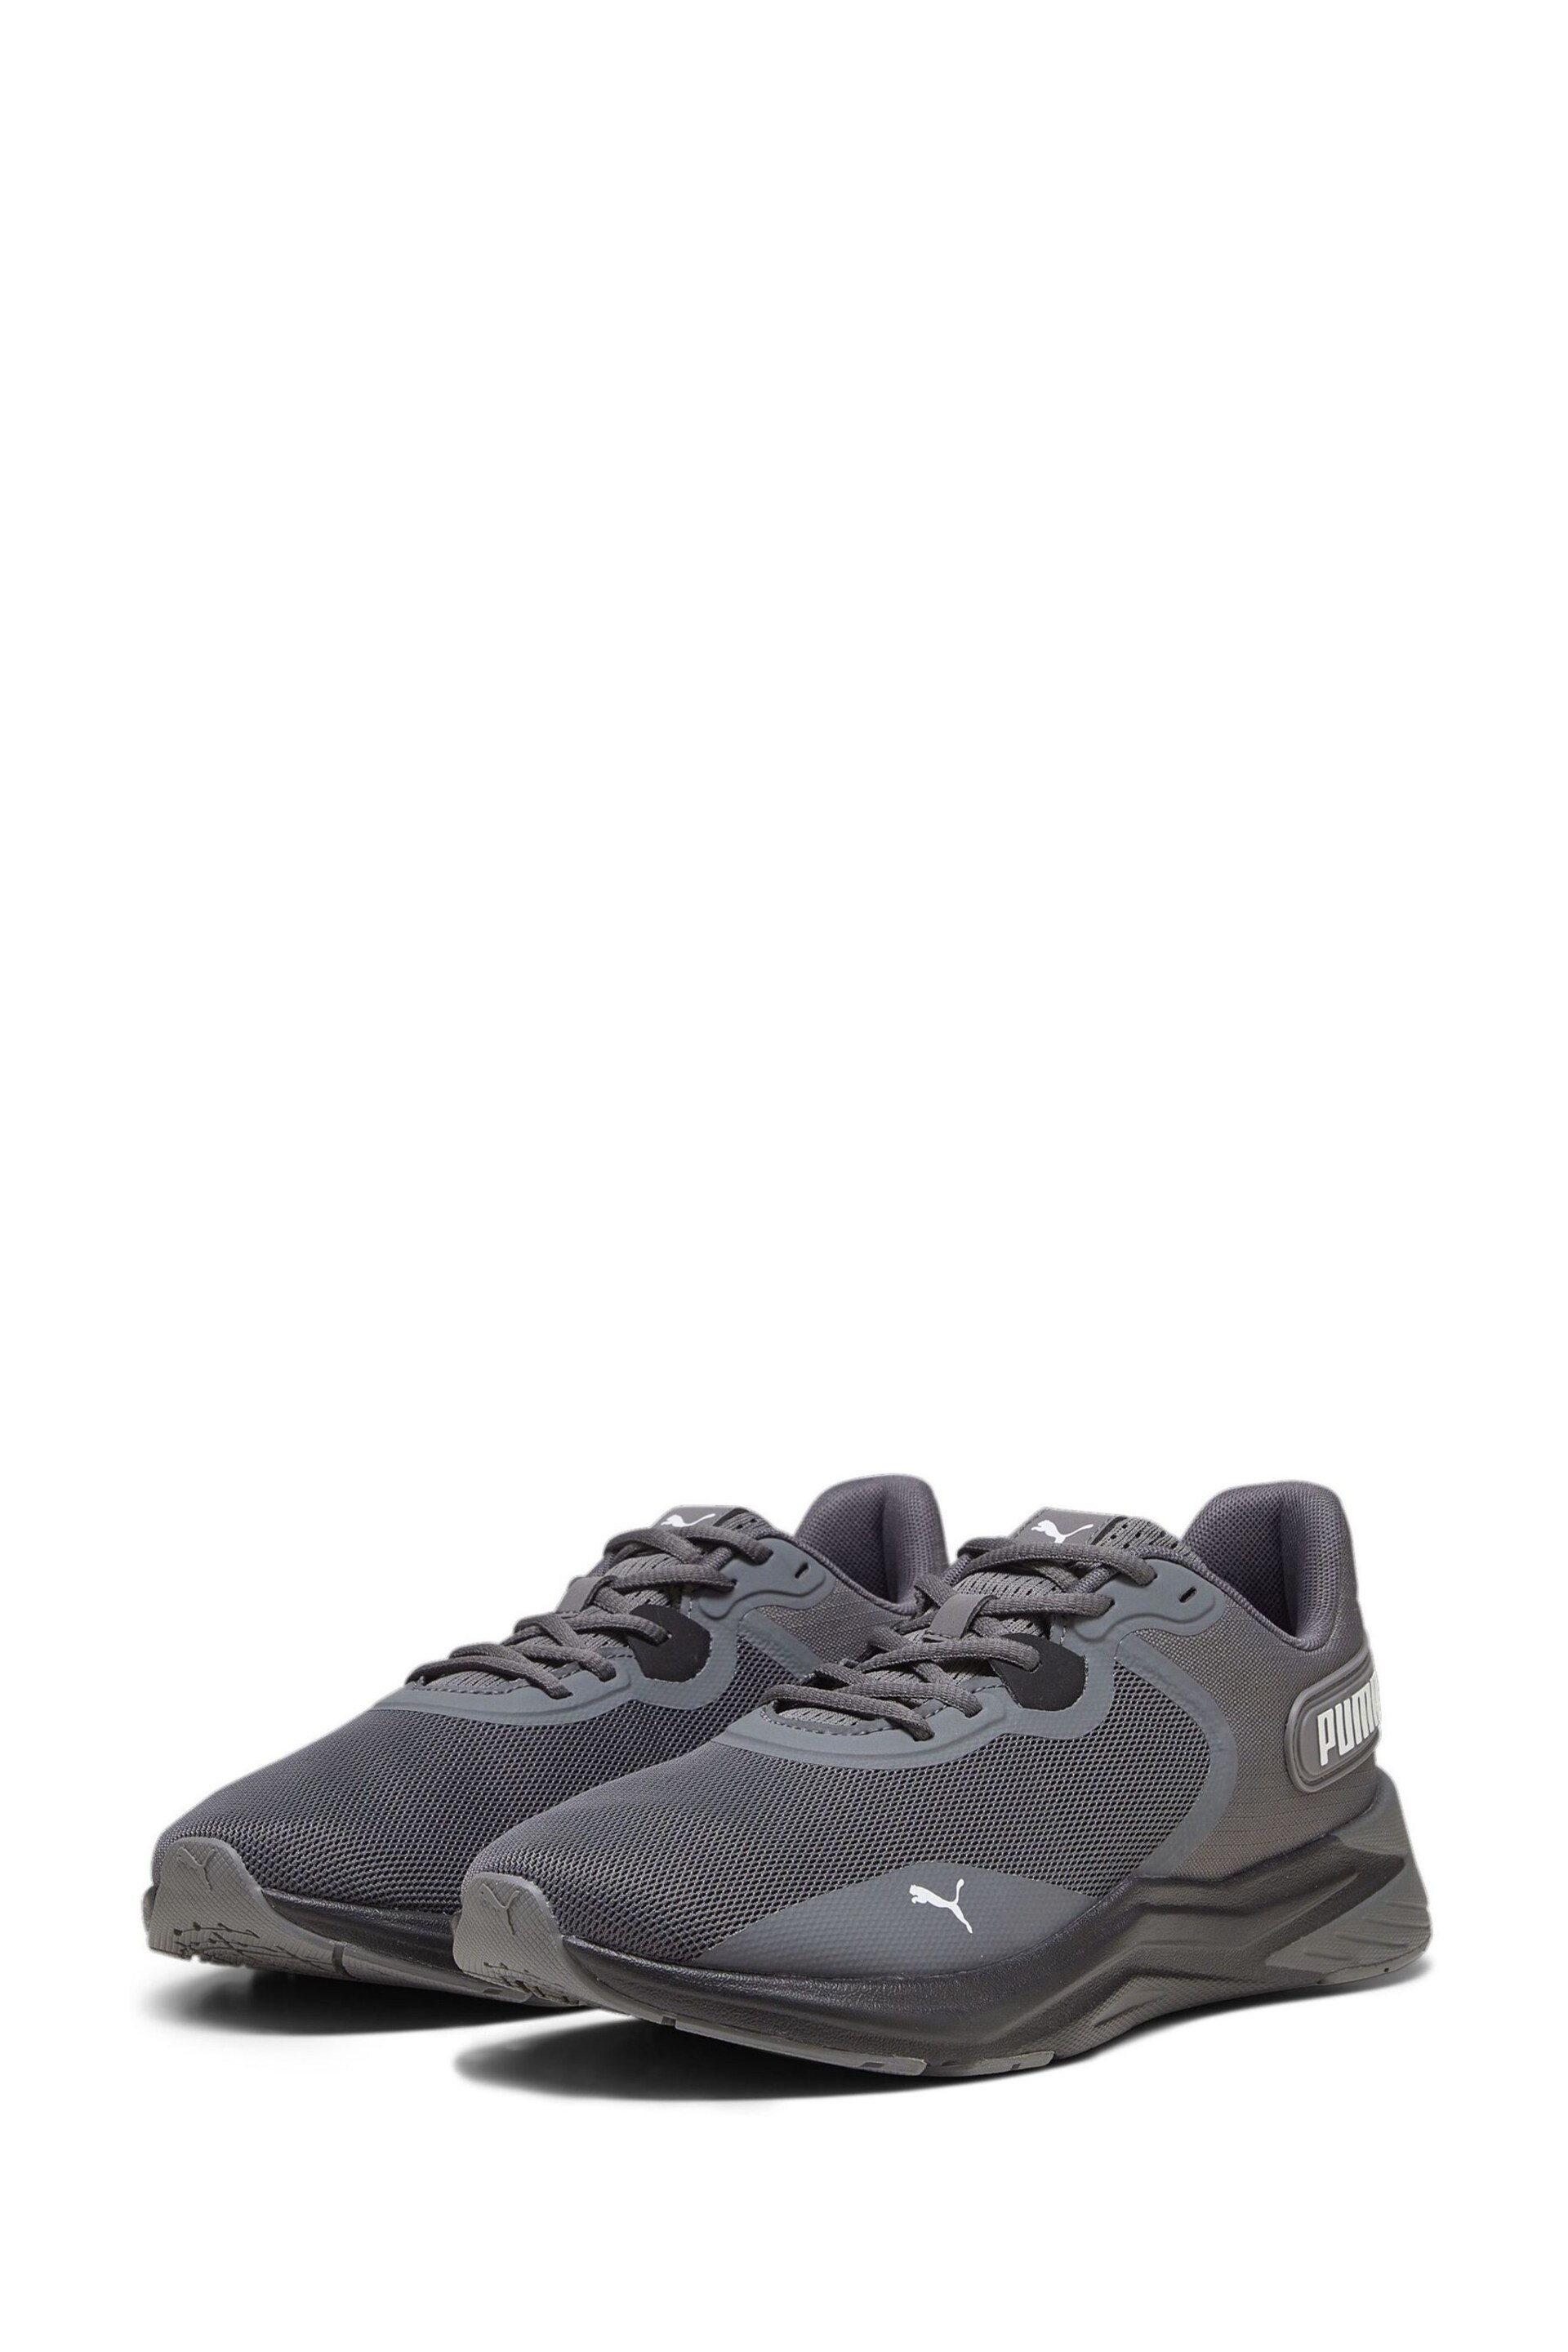 Puma Grey Disperse XT 3 Training Shoes - Image 2 of 4